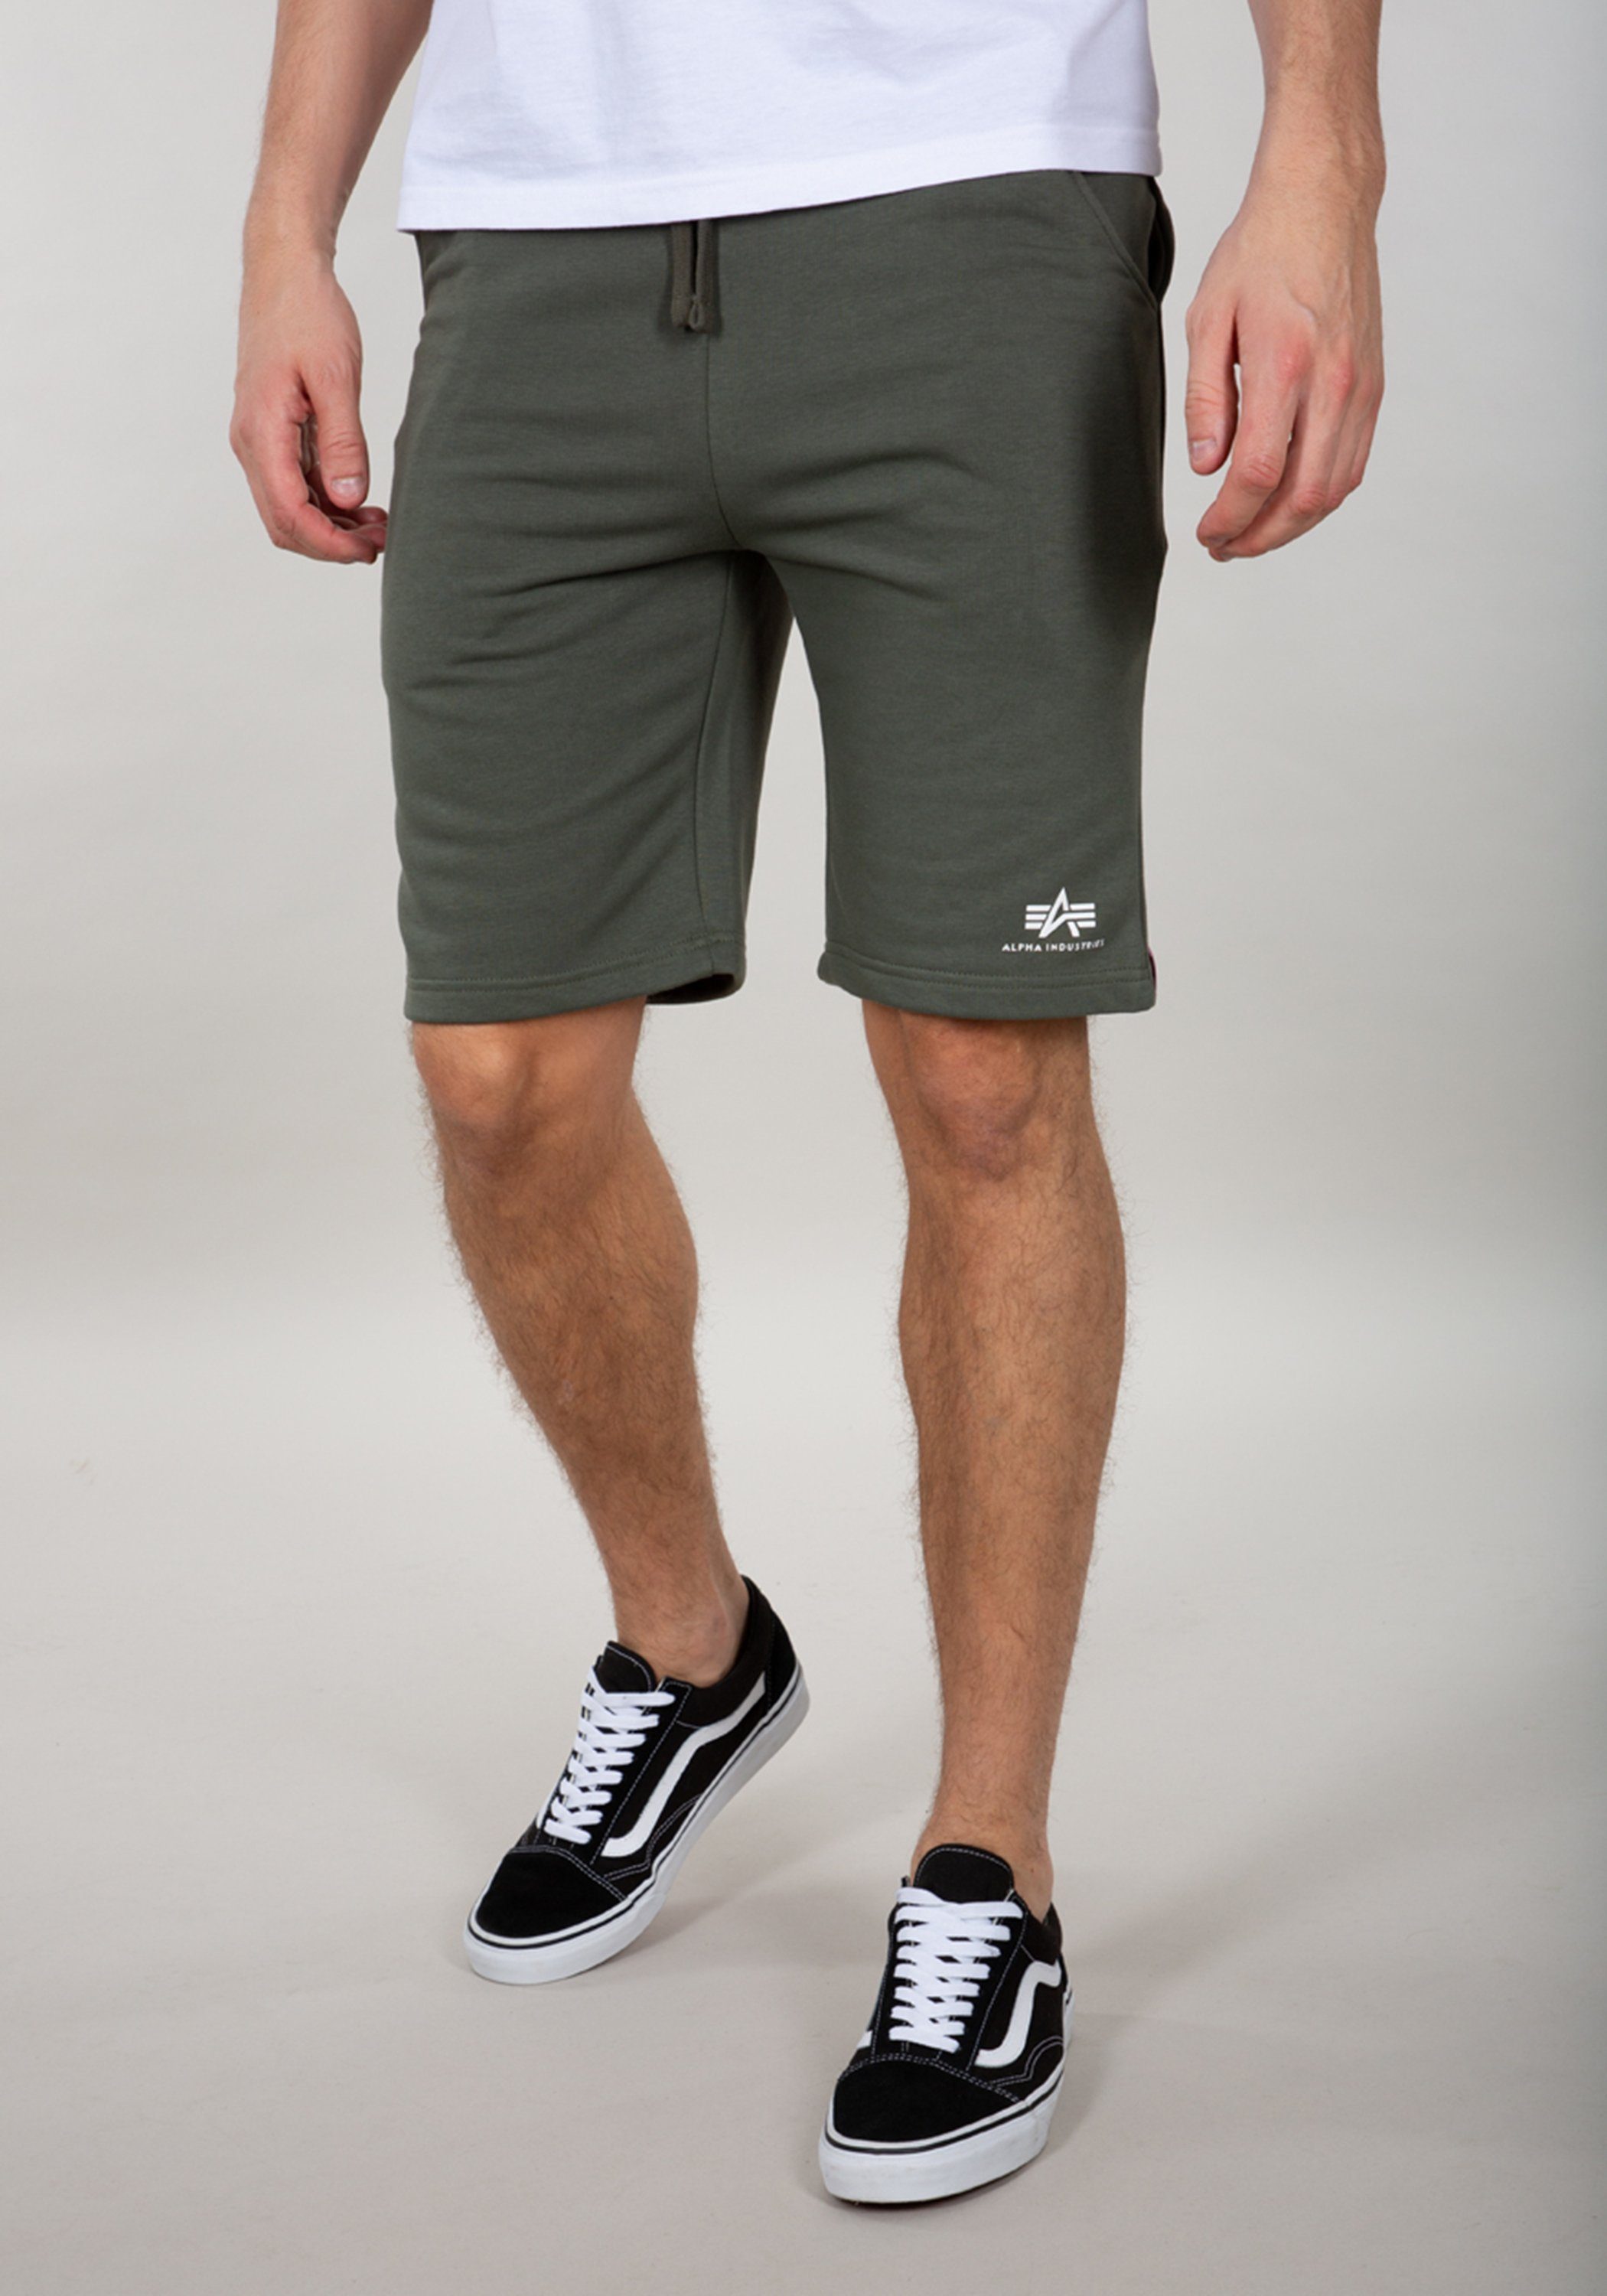 Basic Alpha dark Short Men SL Sweatshorts Industries Industries - Alpha Shorts olive